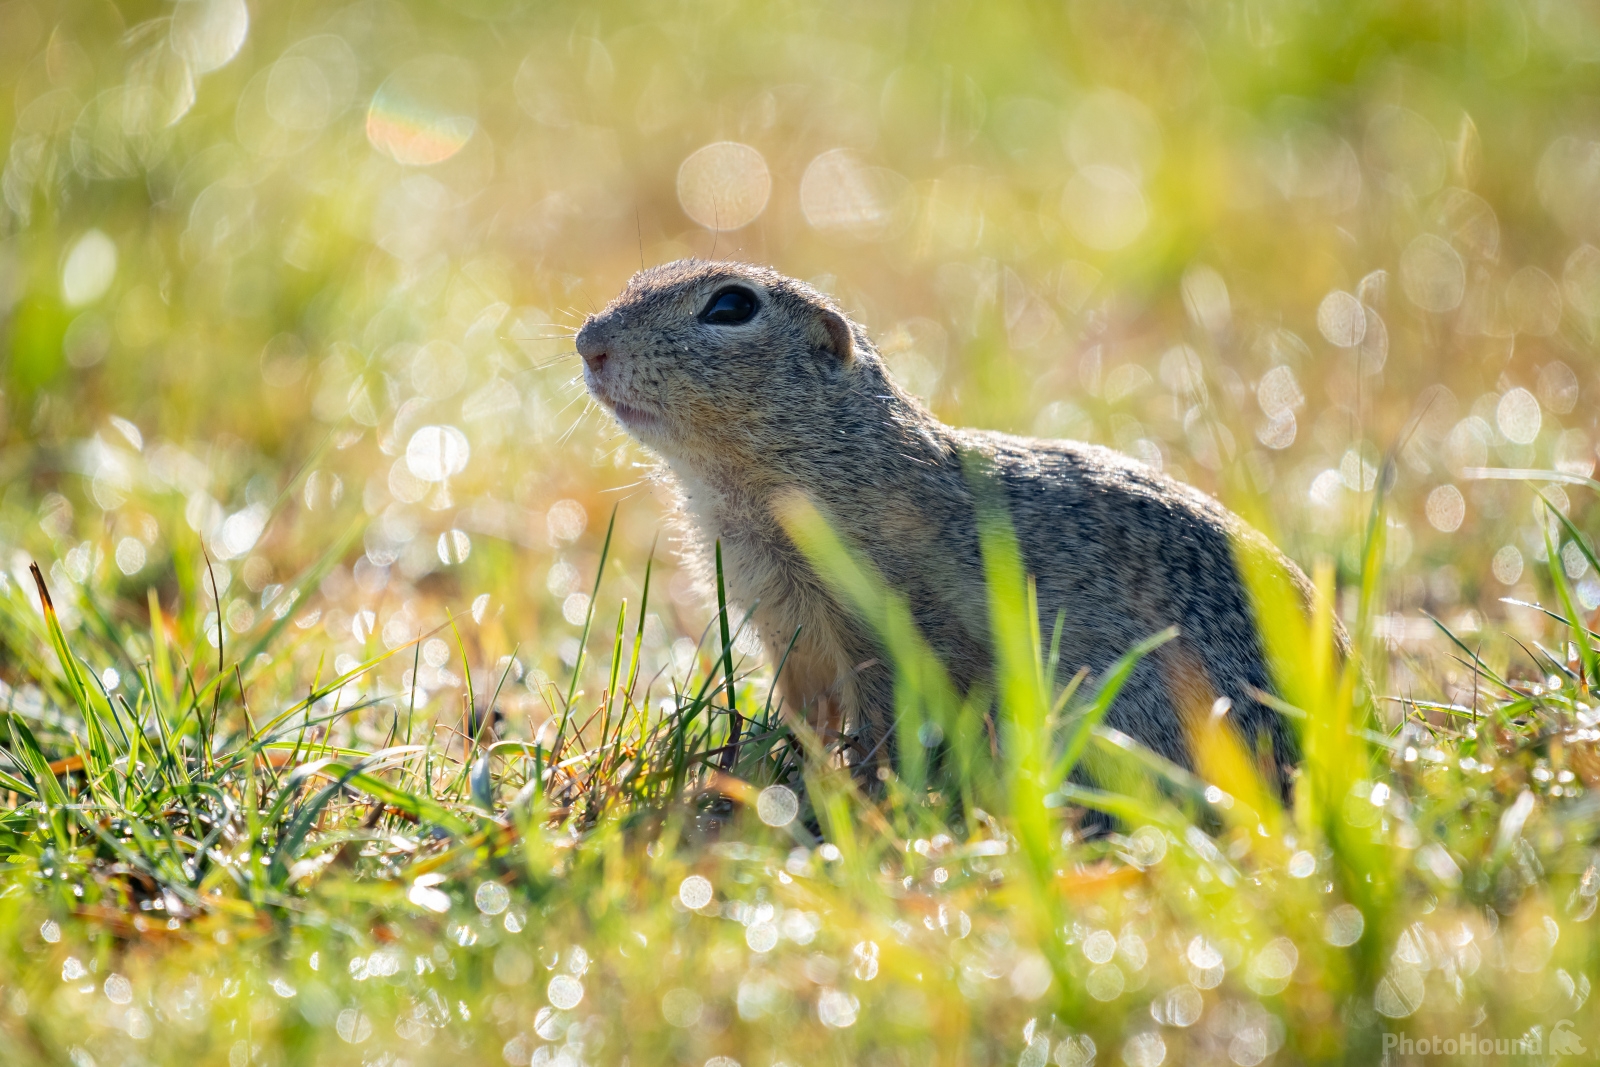 Image of Radouč European ground squirrel colony by VOJTa Herout